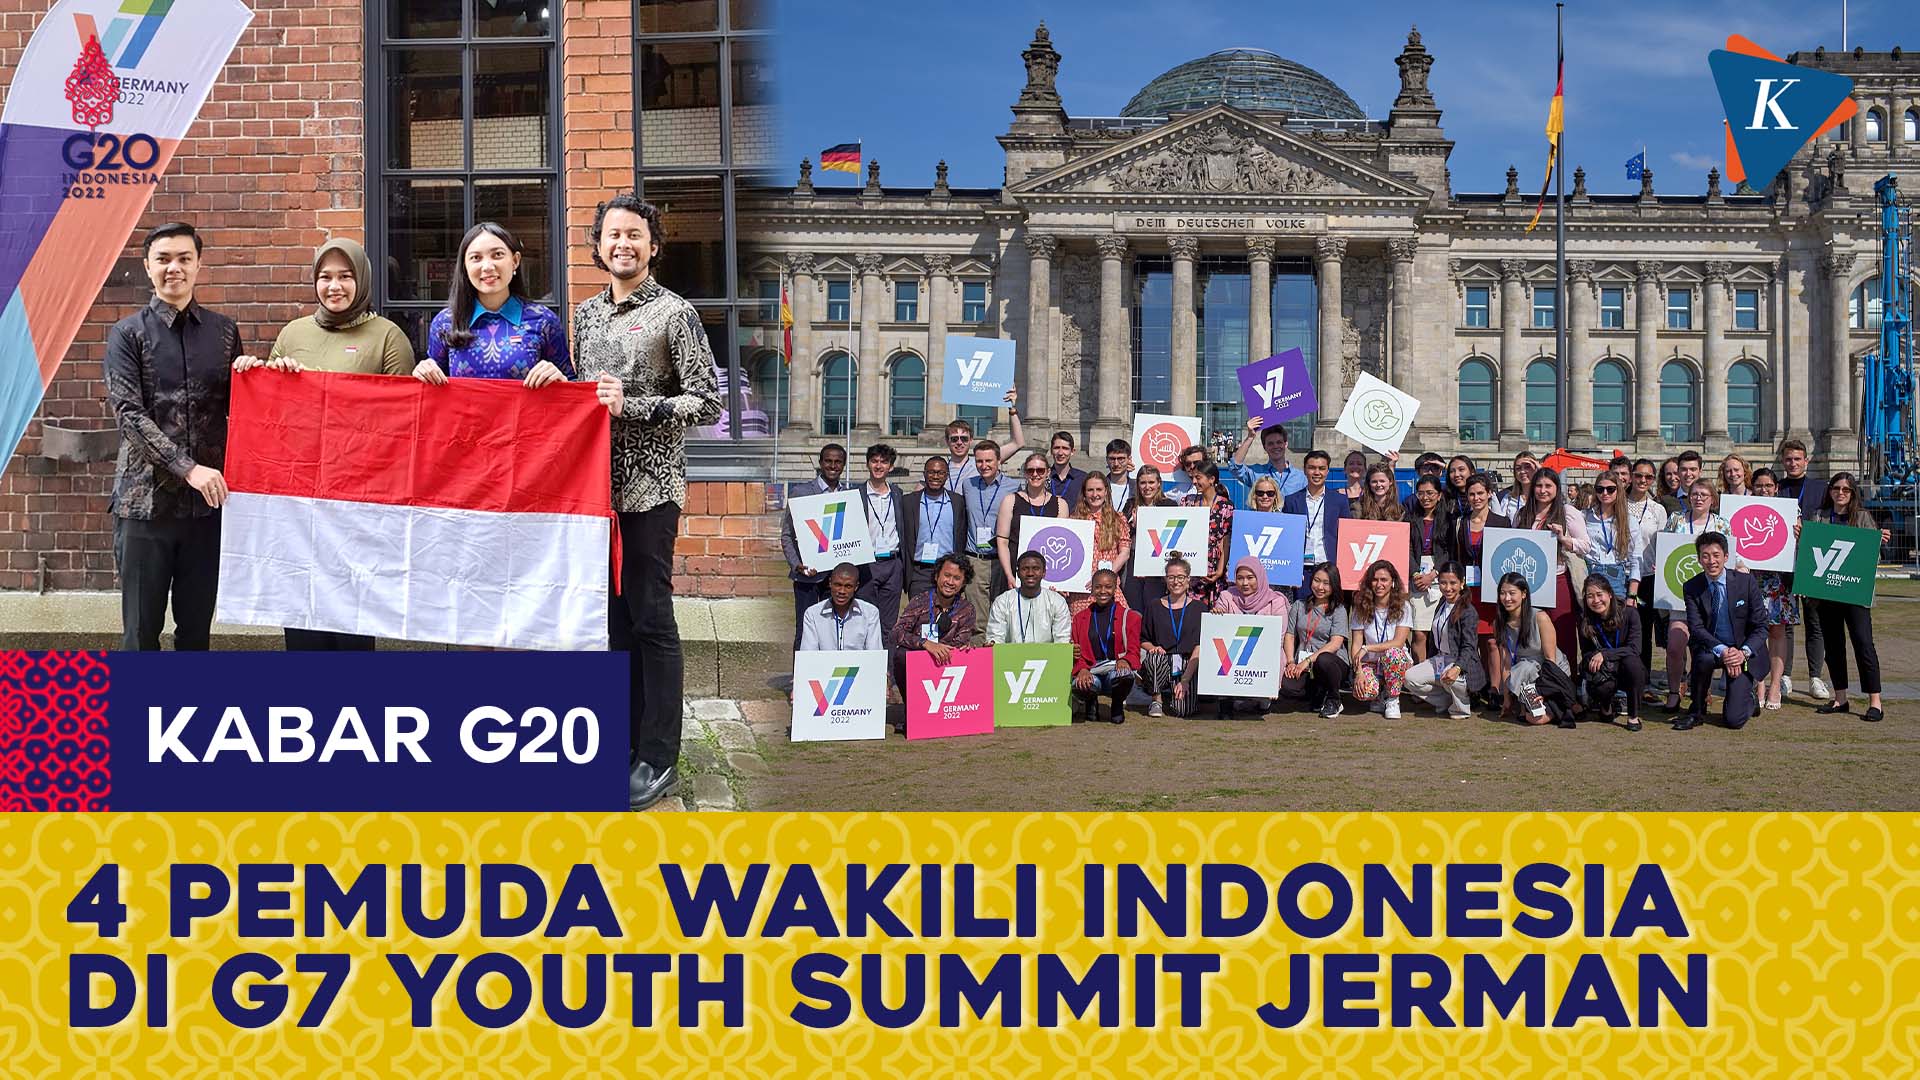 Empat Pemuda Wakili Indonesia dalam G7 Youth Summit di Berlin Jerman